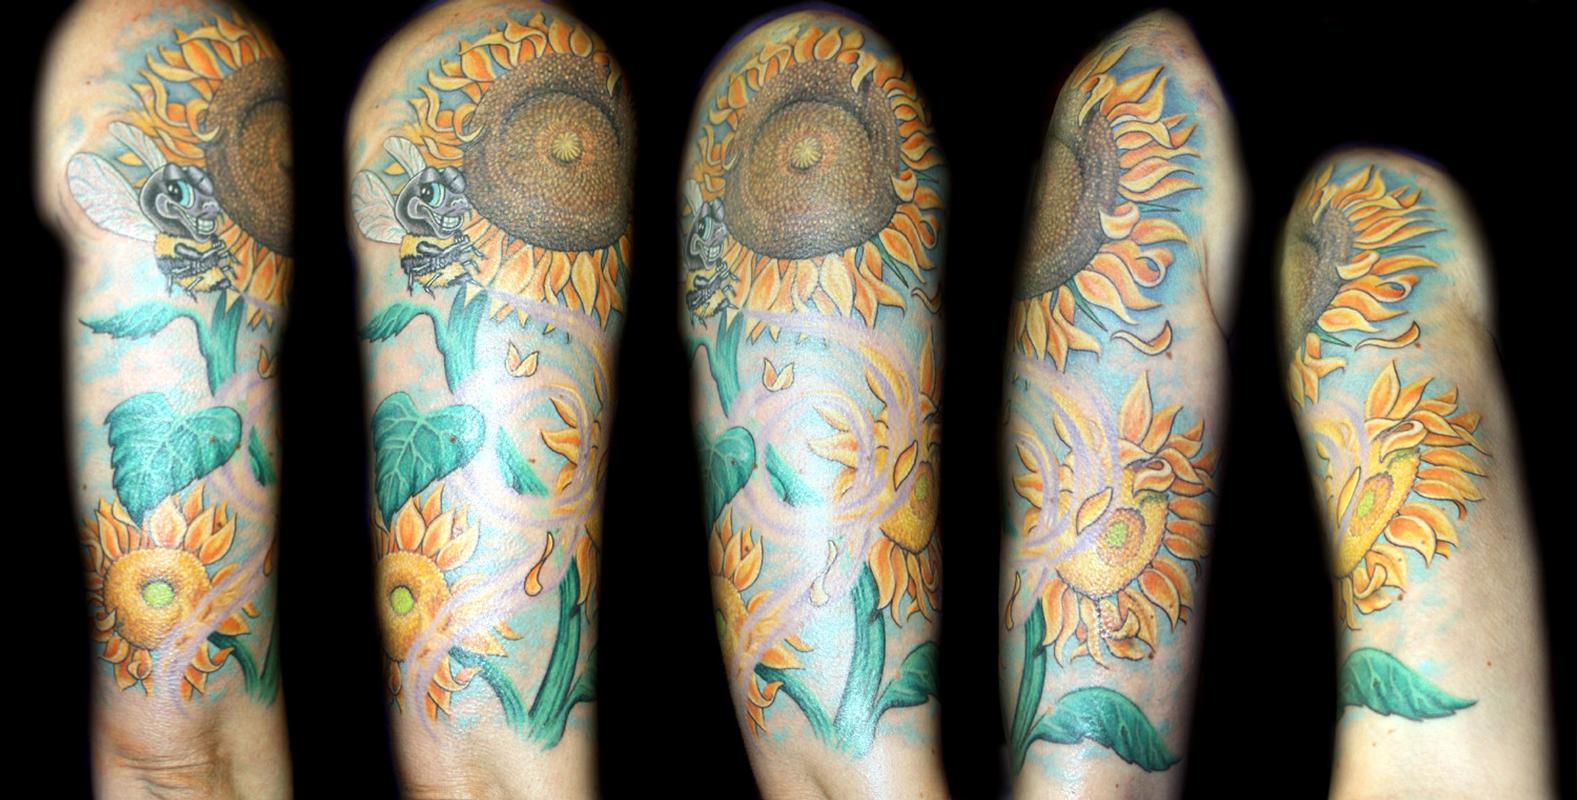 Fallen Leaf Tattoos And Piercings Tattoos Half Sleeve Color